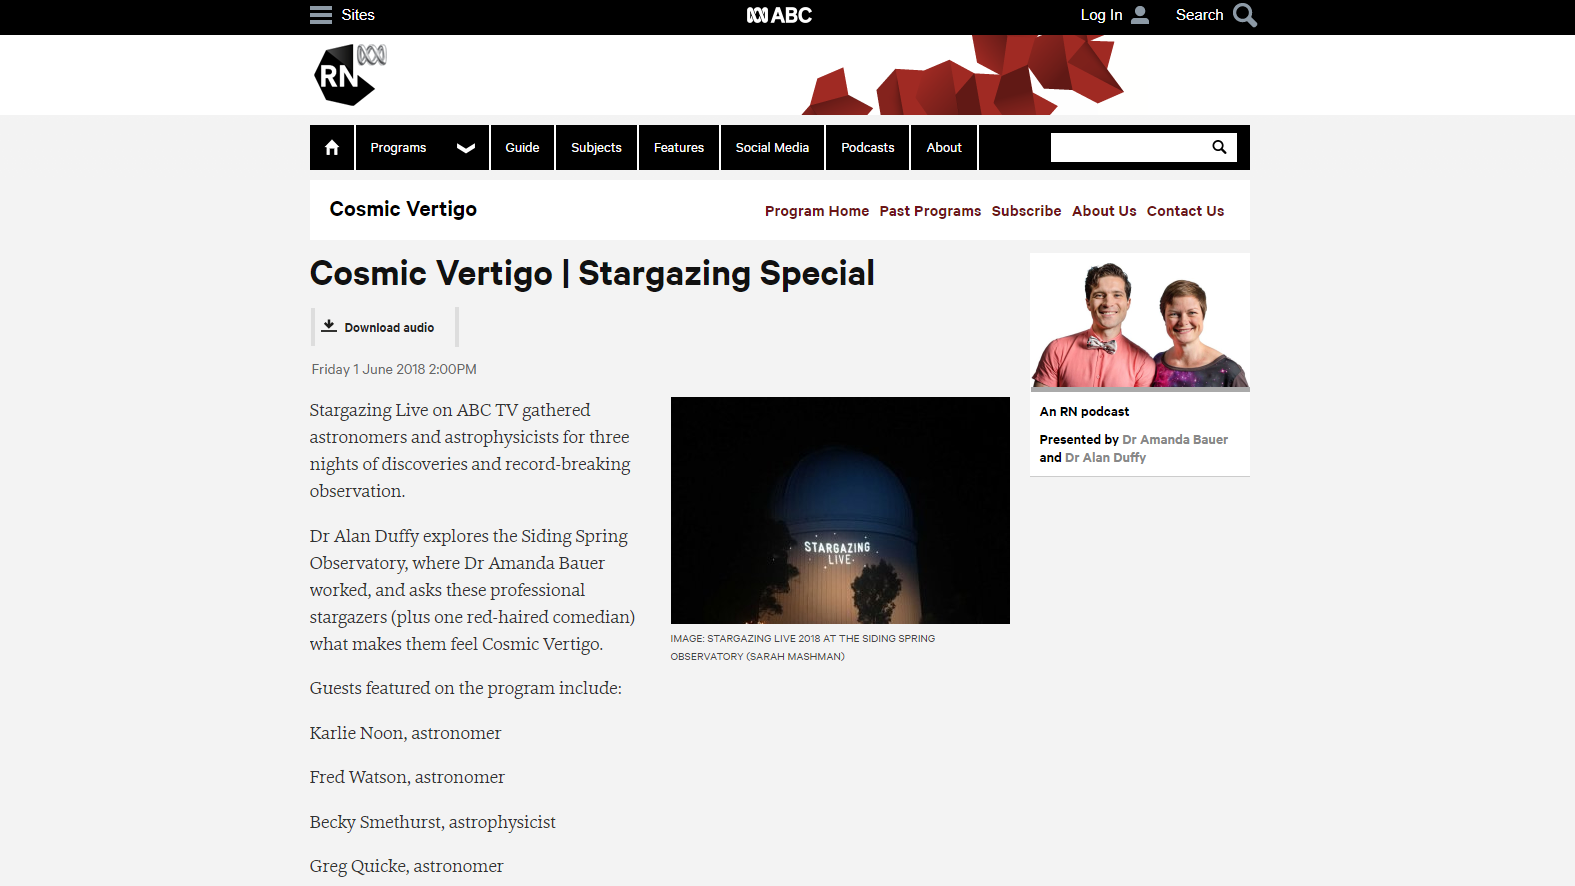 Listen to Alan Duffy's Cosmic Vertigo podcast on Stargazing Live 2018 with Greg Quicke.